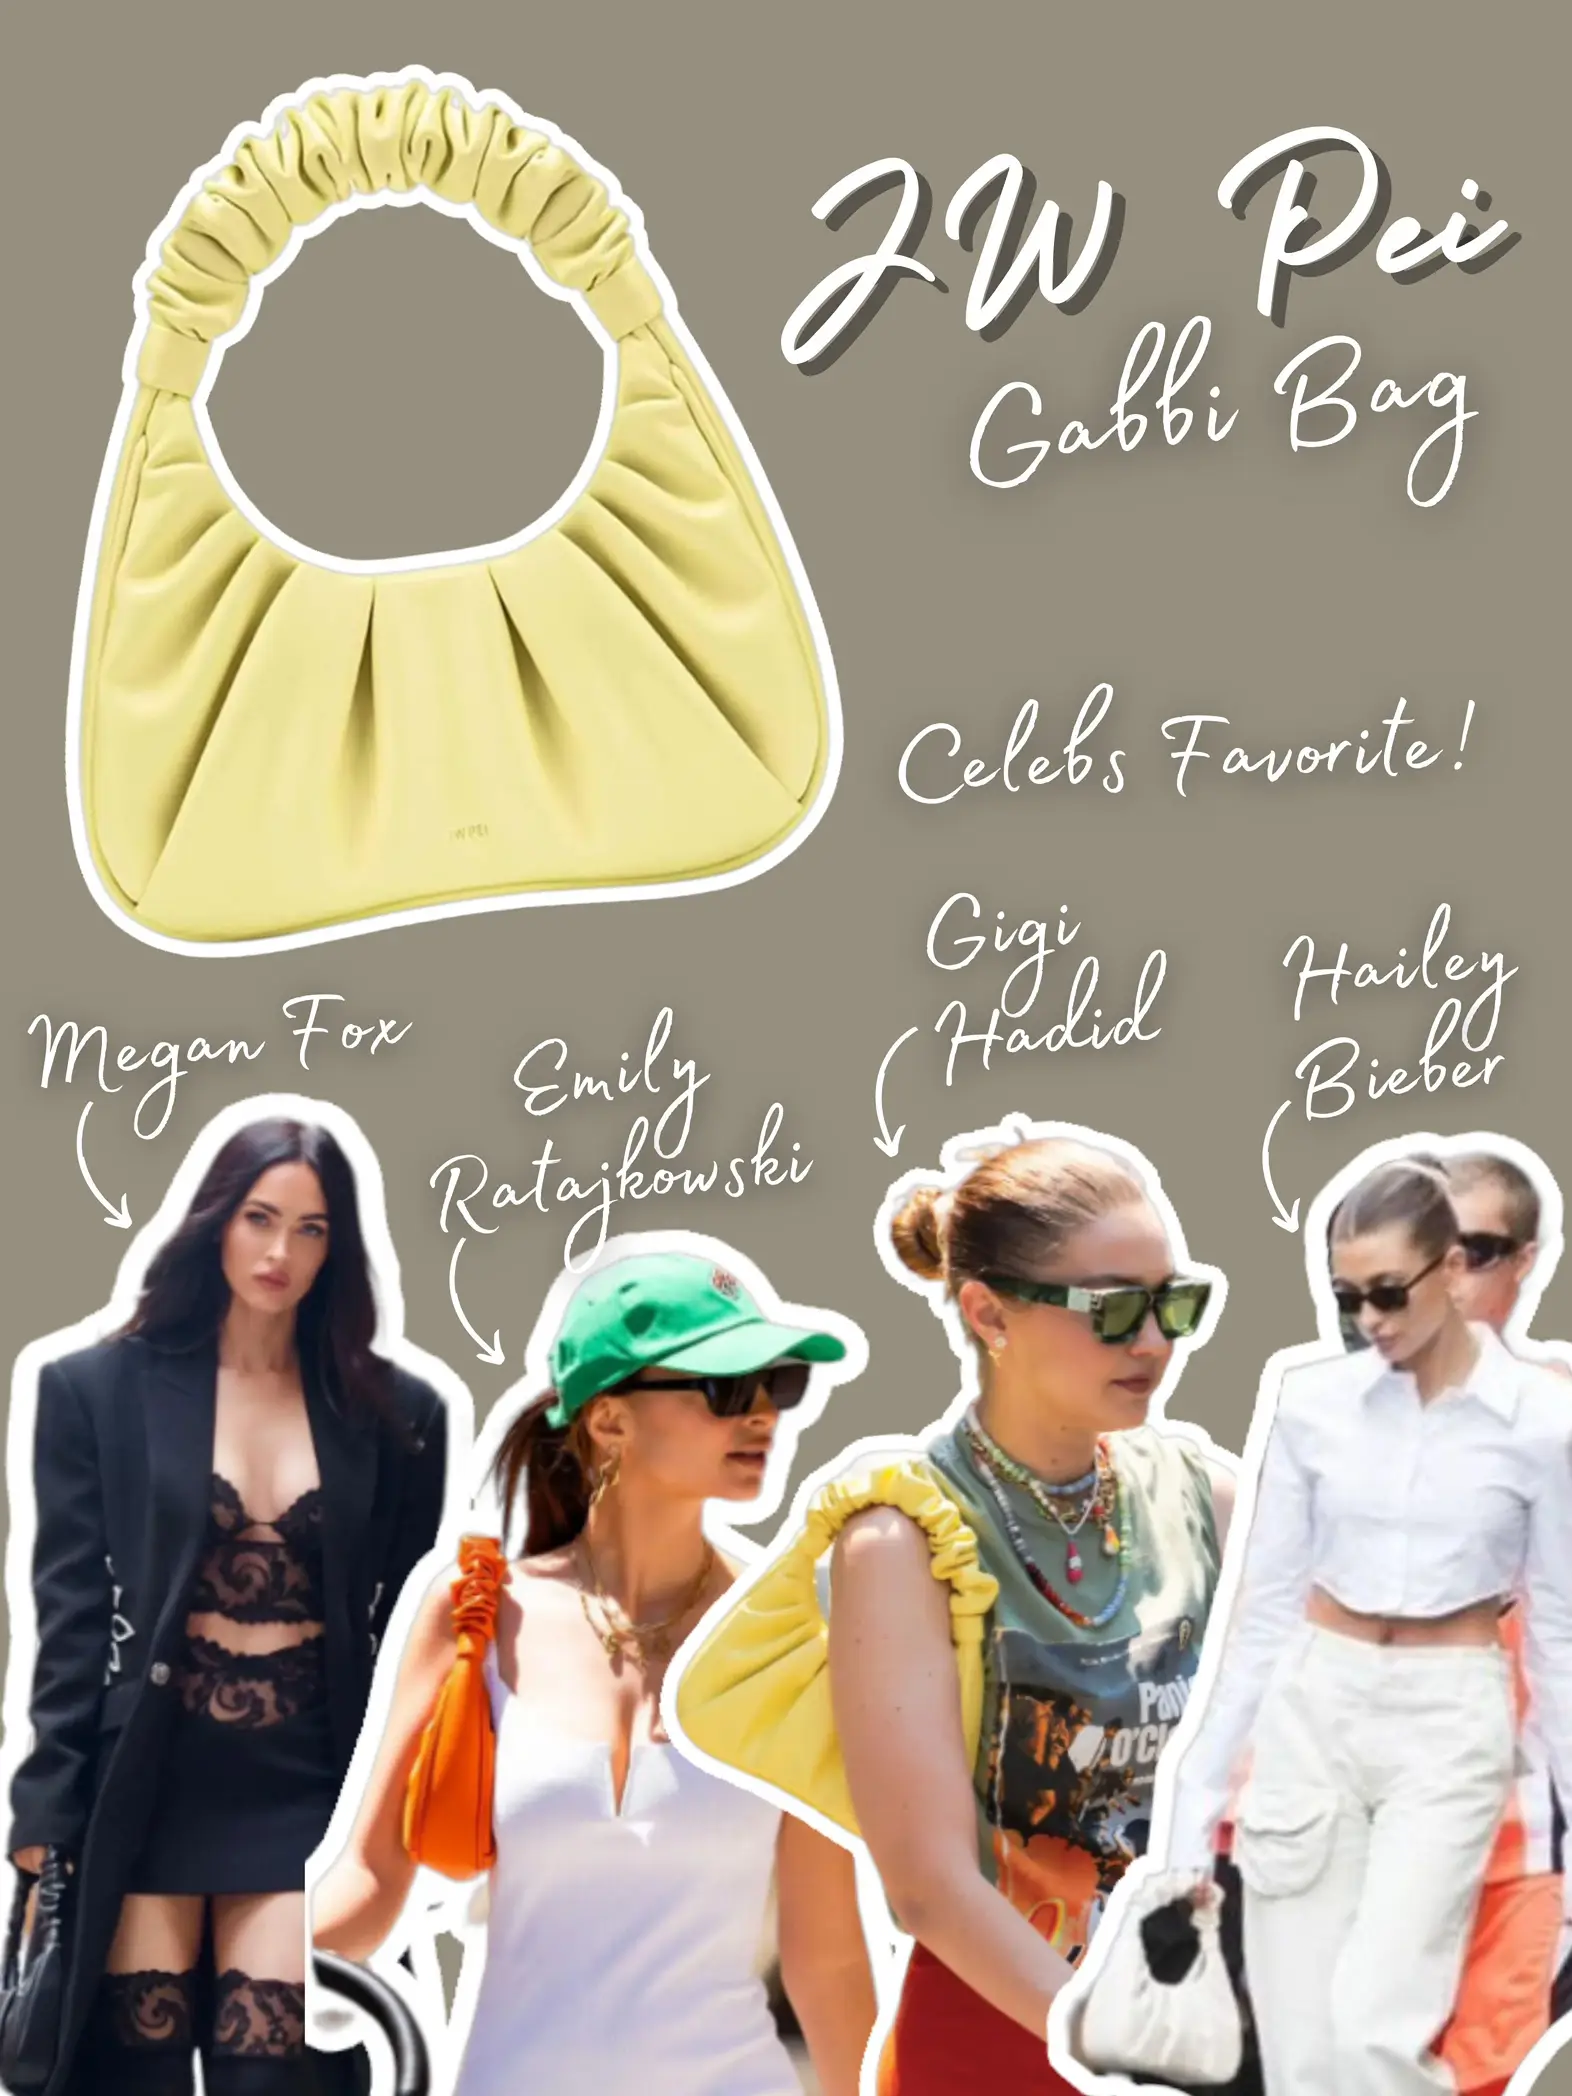 Megan Fox Owns This JW PEI Gabbi Bag in Multiple Colors